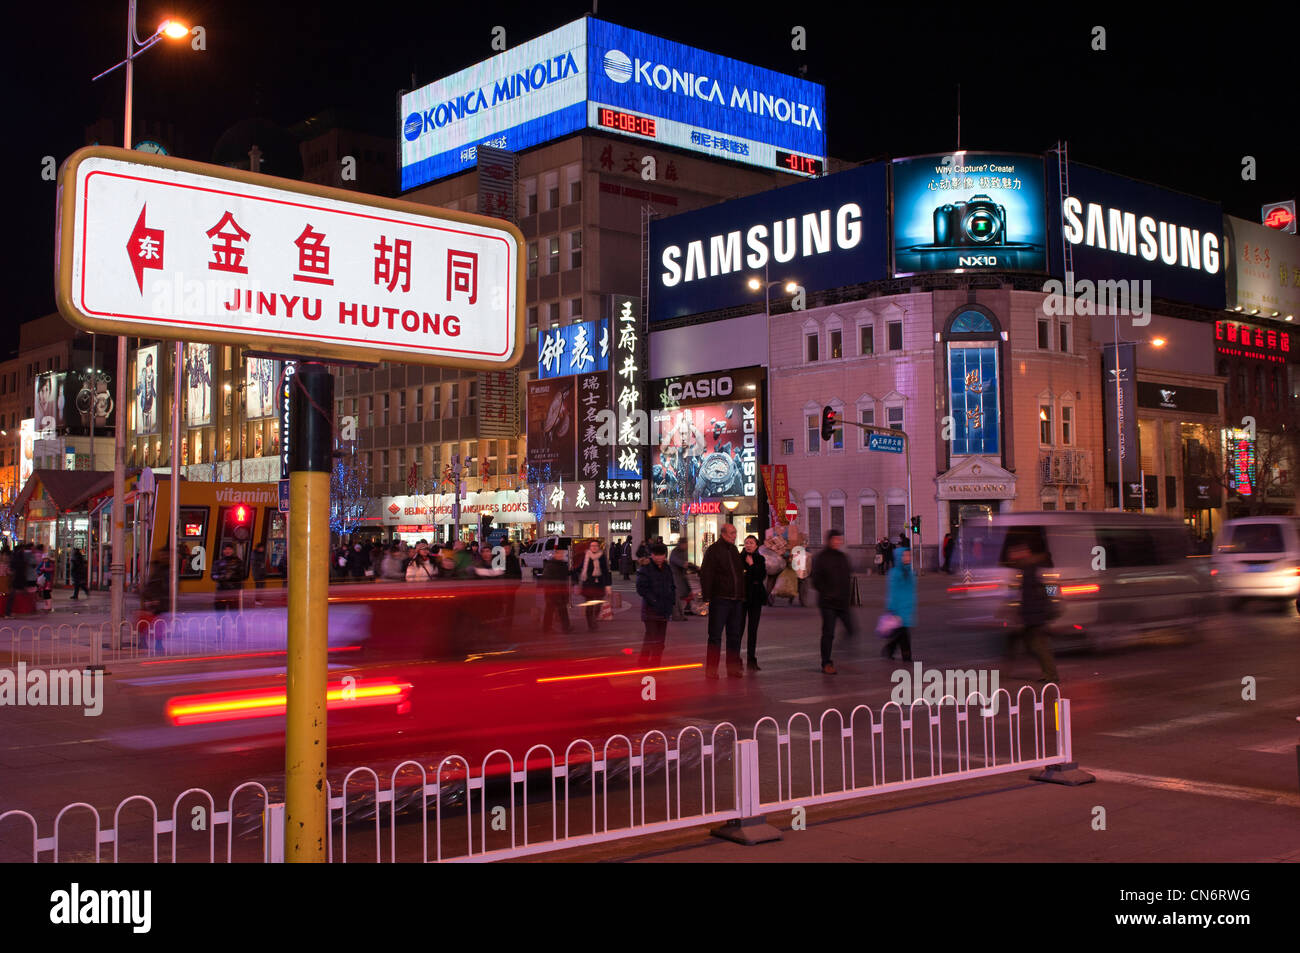 Serata in illumina la strada dello shopping di Wangfujing, Pechino, Cina Foto Stock